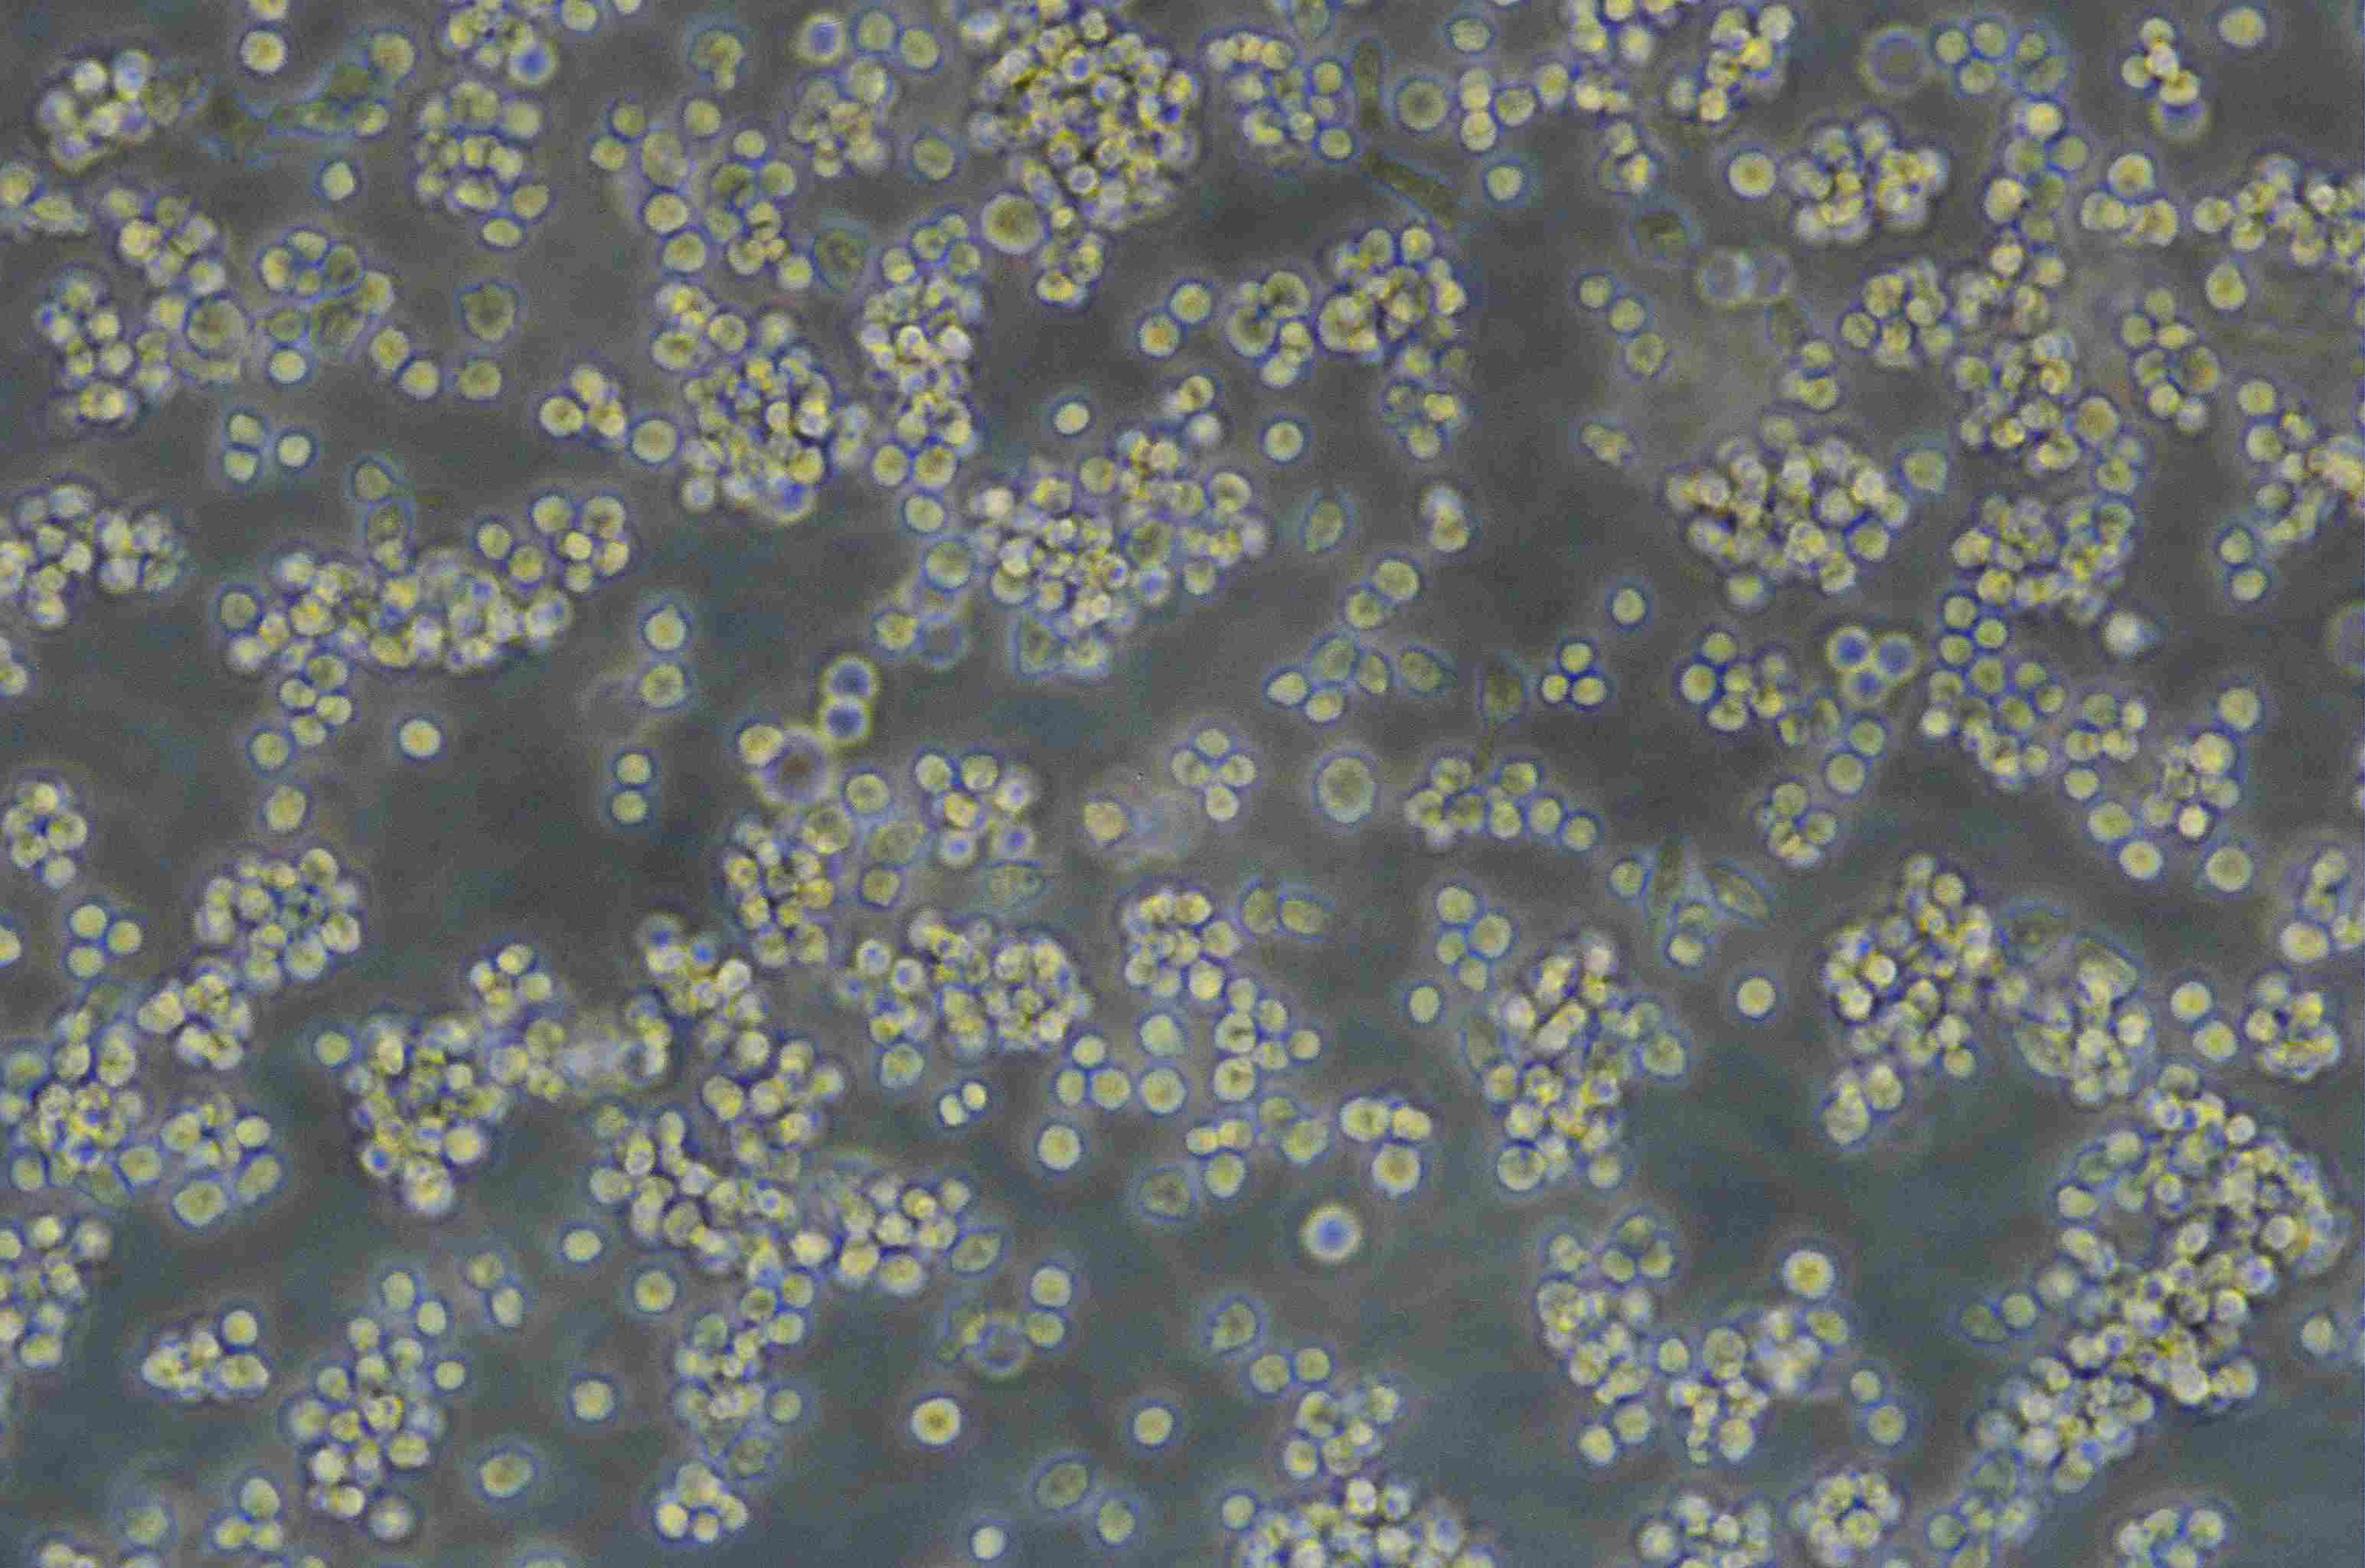 Dami细胞：人巨核细胞白血病细胞系